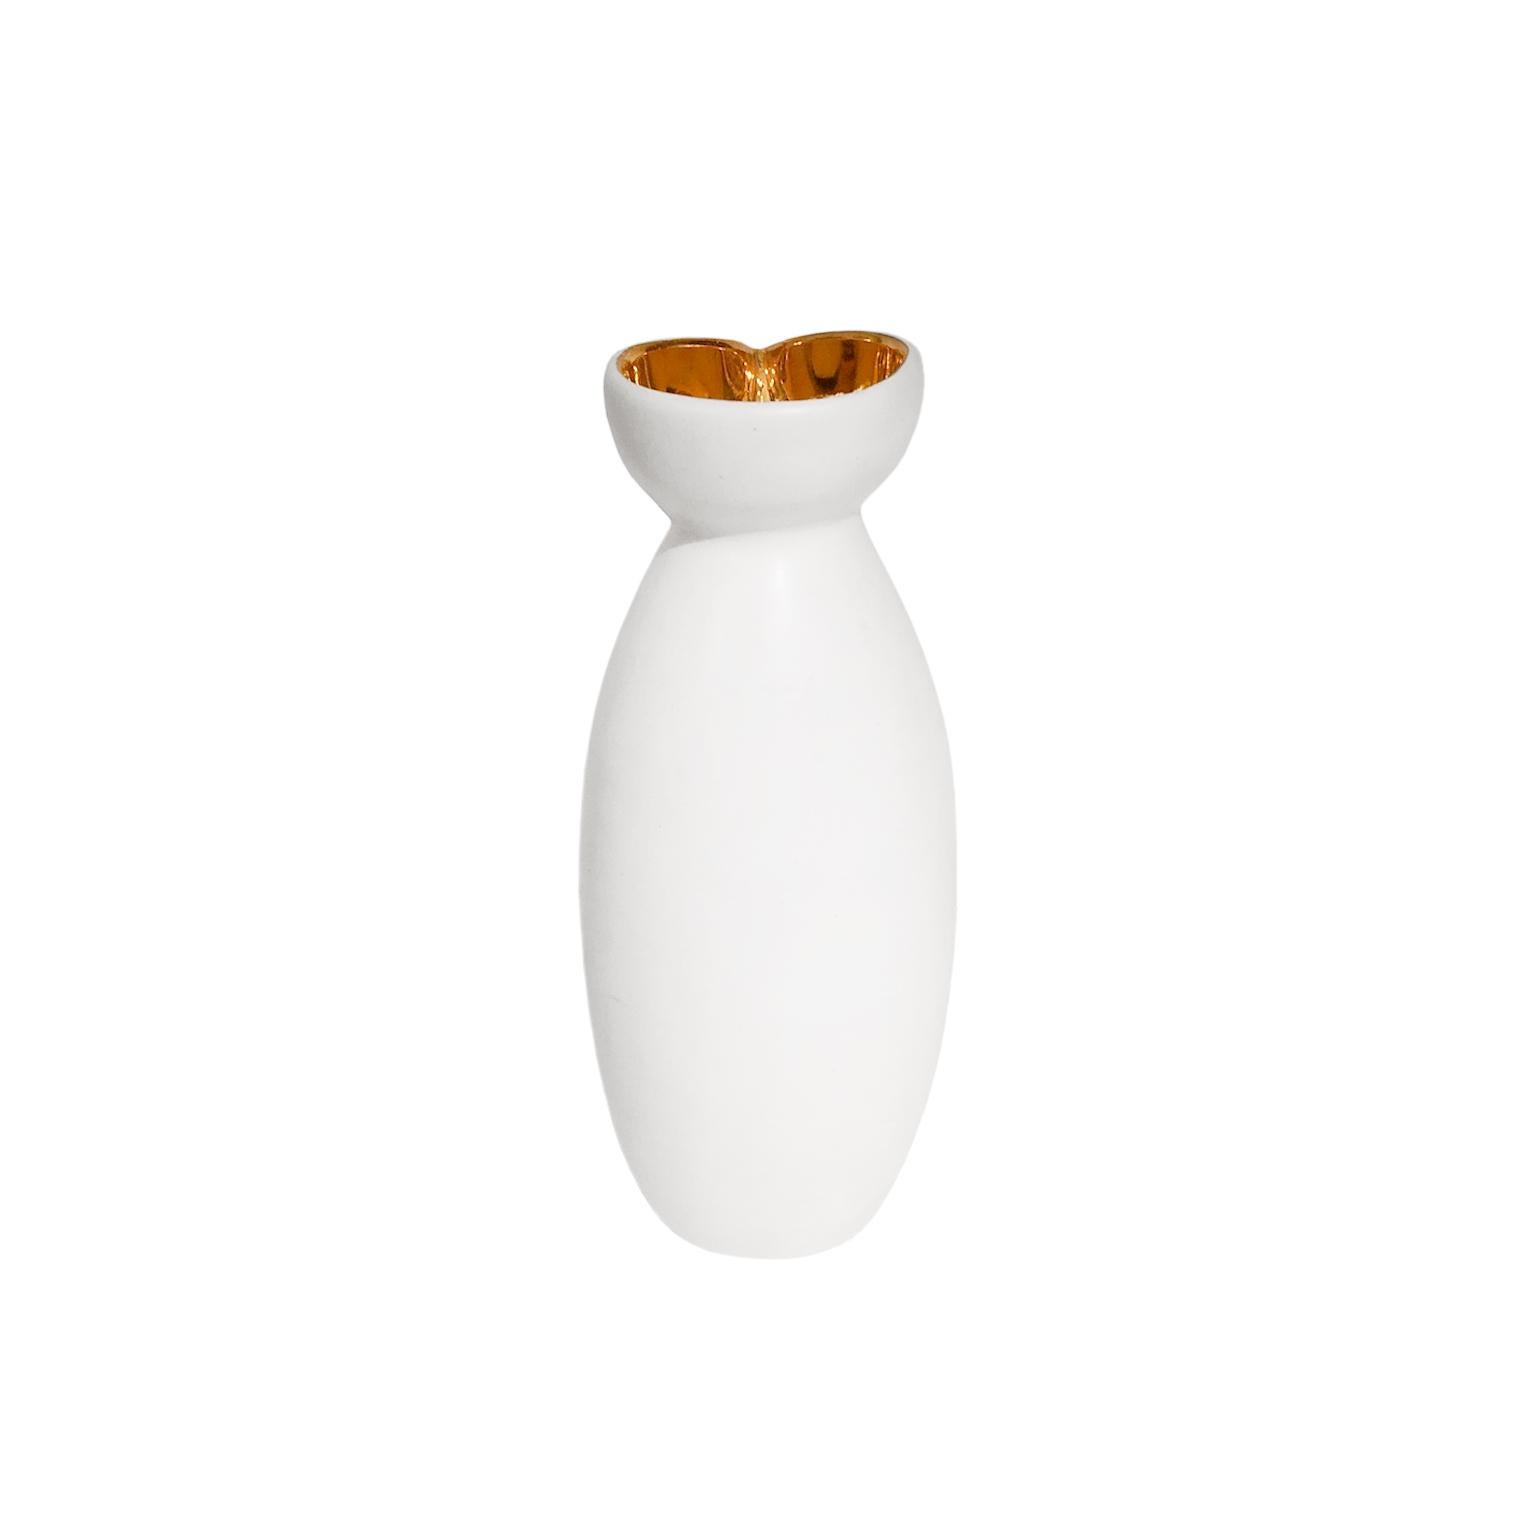 American Alabaster Glaze Ceramic Vase #6 with 22-Karat Gold Lustre Spout by Sandi Fellman